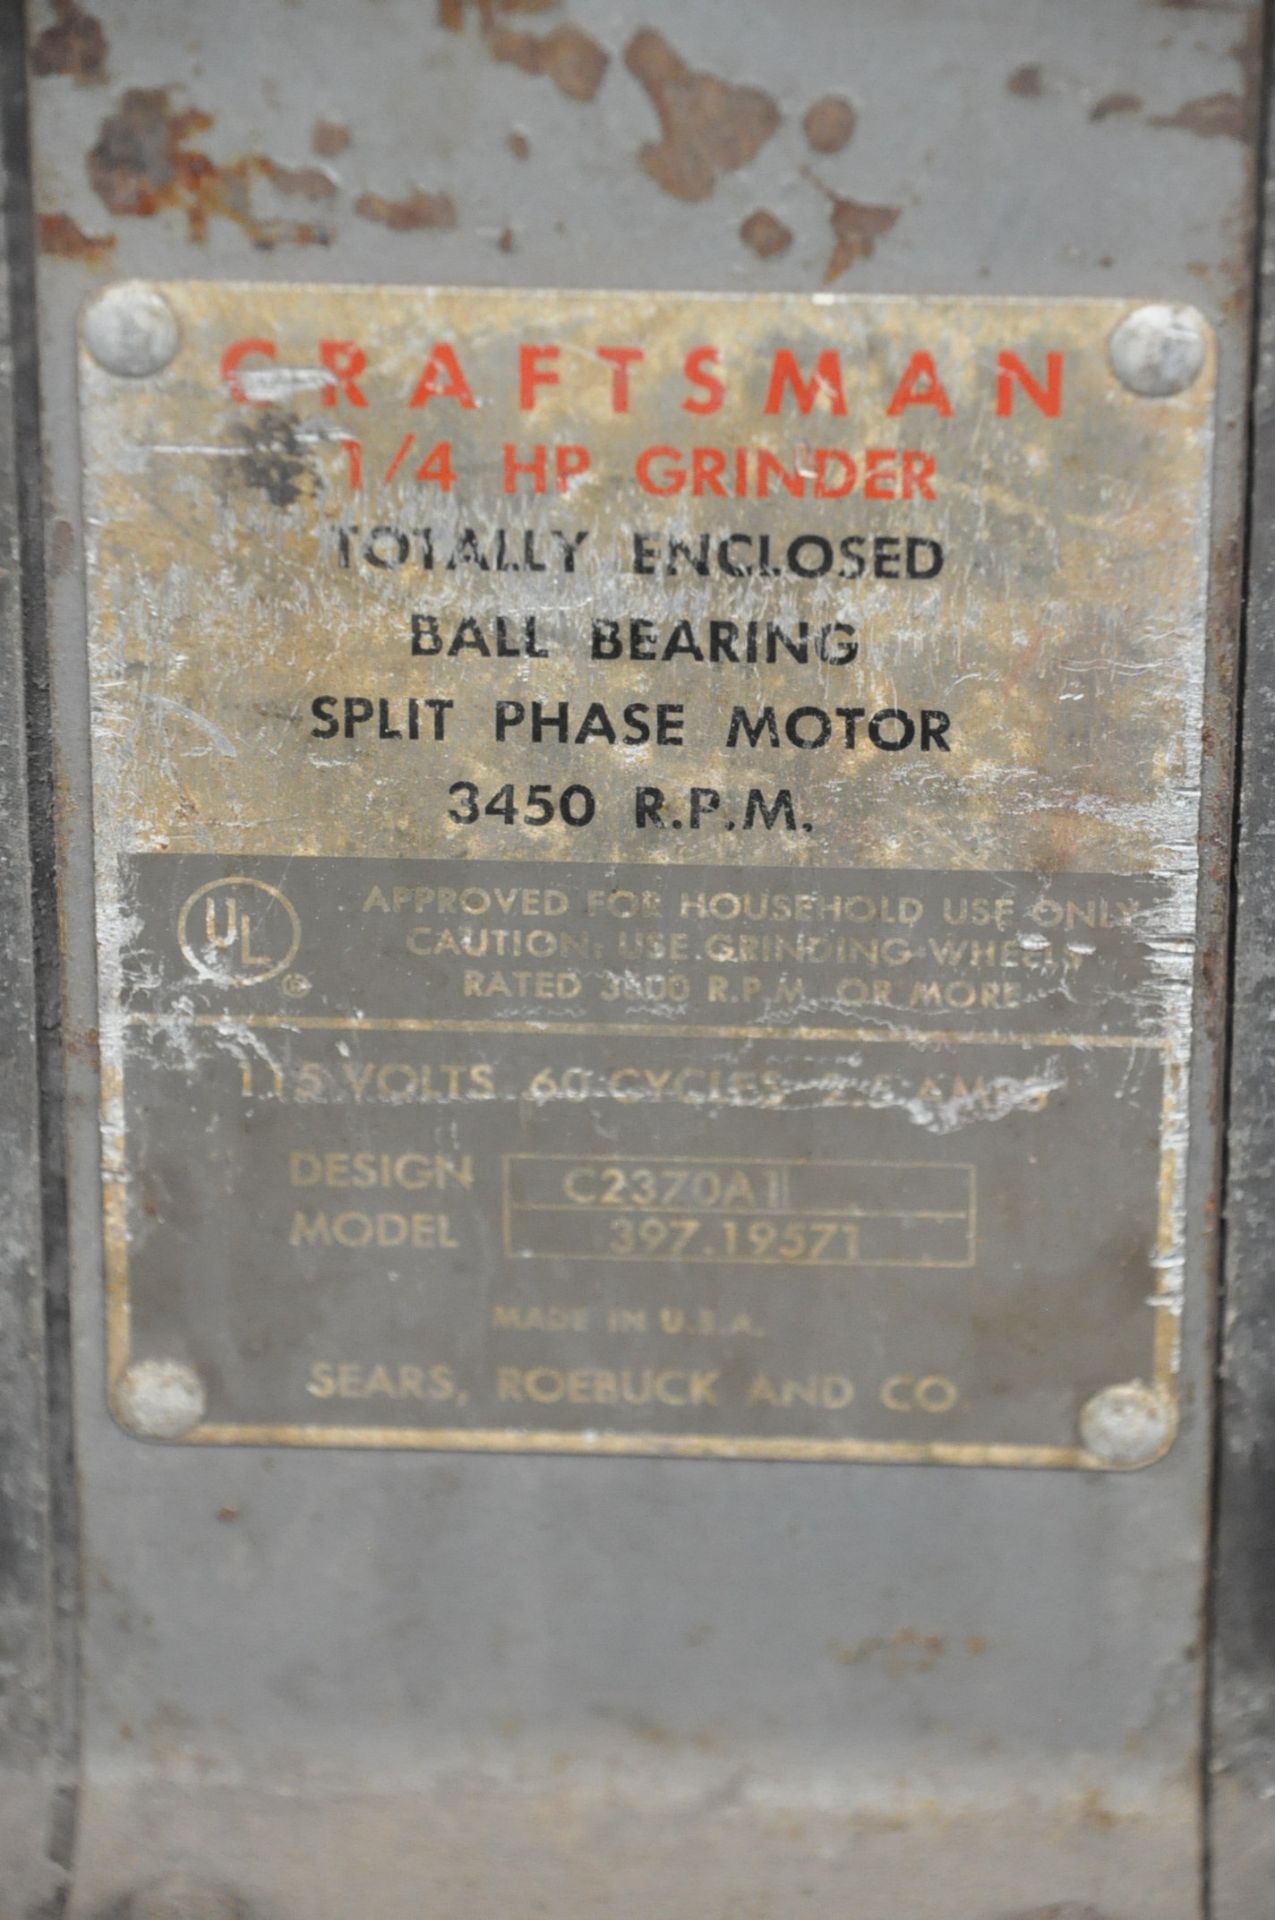 Craftsman 397.19571, 6" x 1/4-HP Double End Pedestal Type Grinder, S/n N/a, 3450-RPM, 1-PH - Image 2 of 2